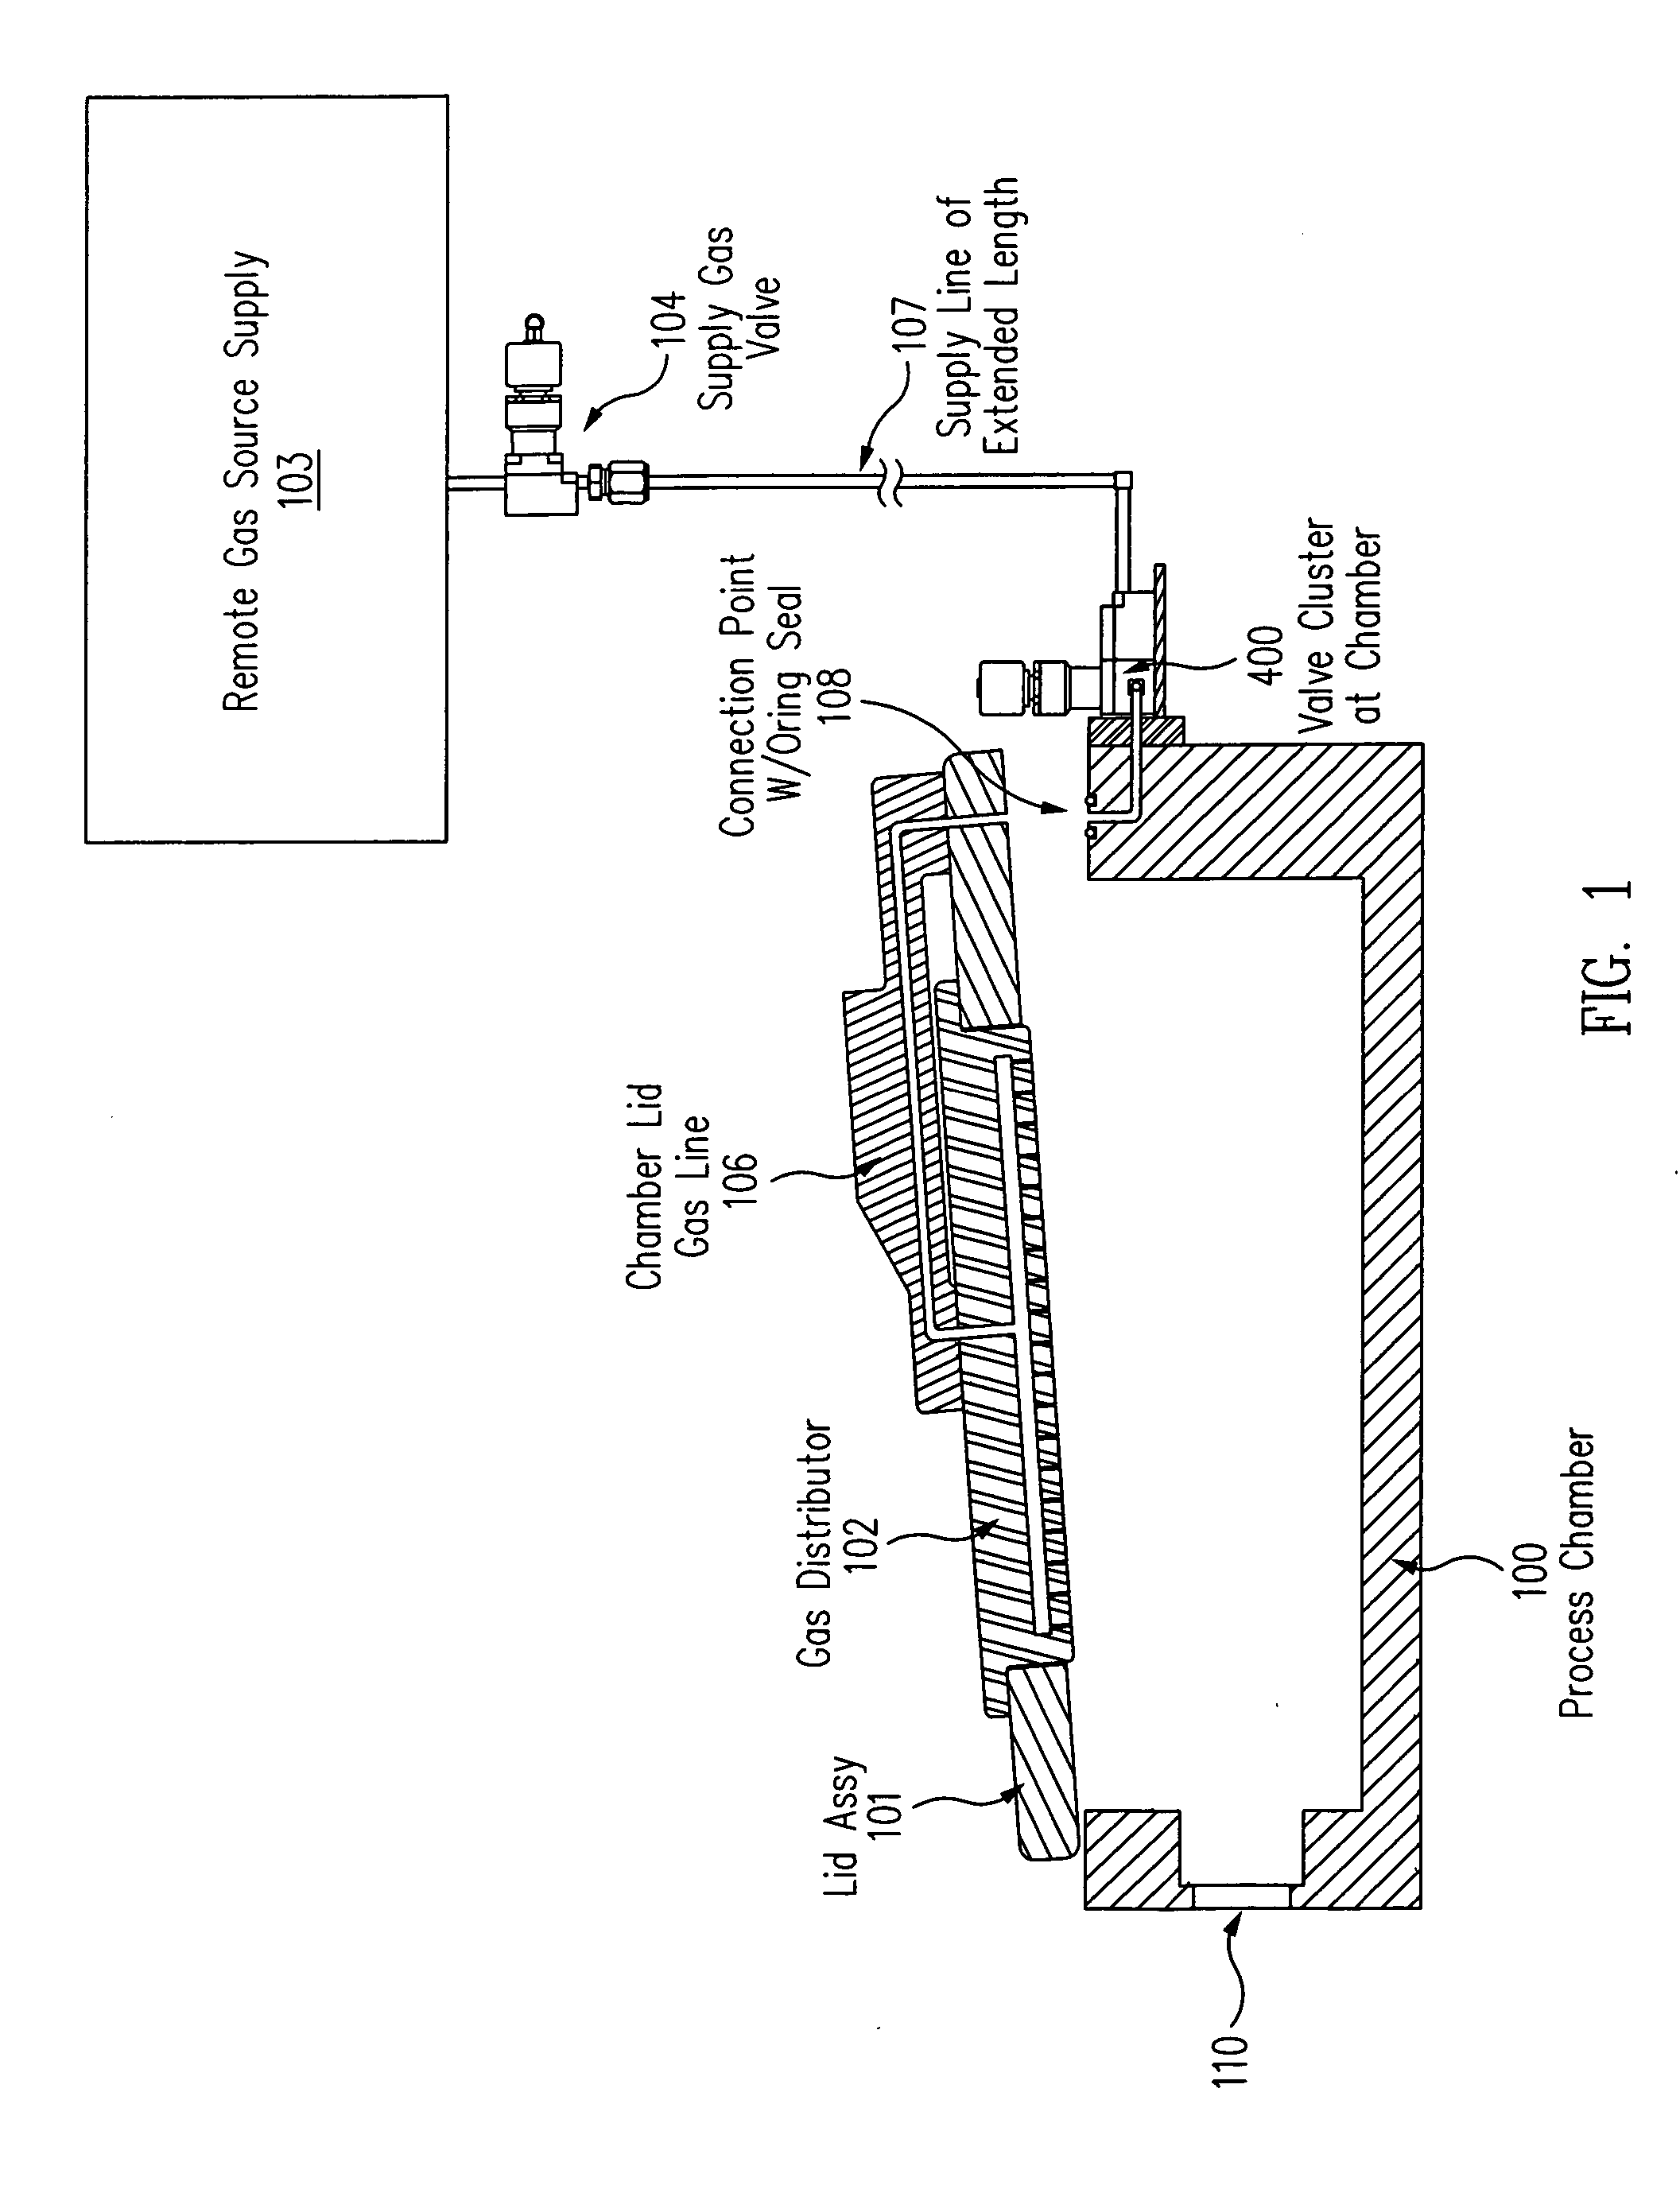 Gas manifold valve cluster